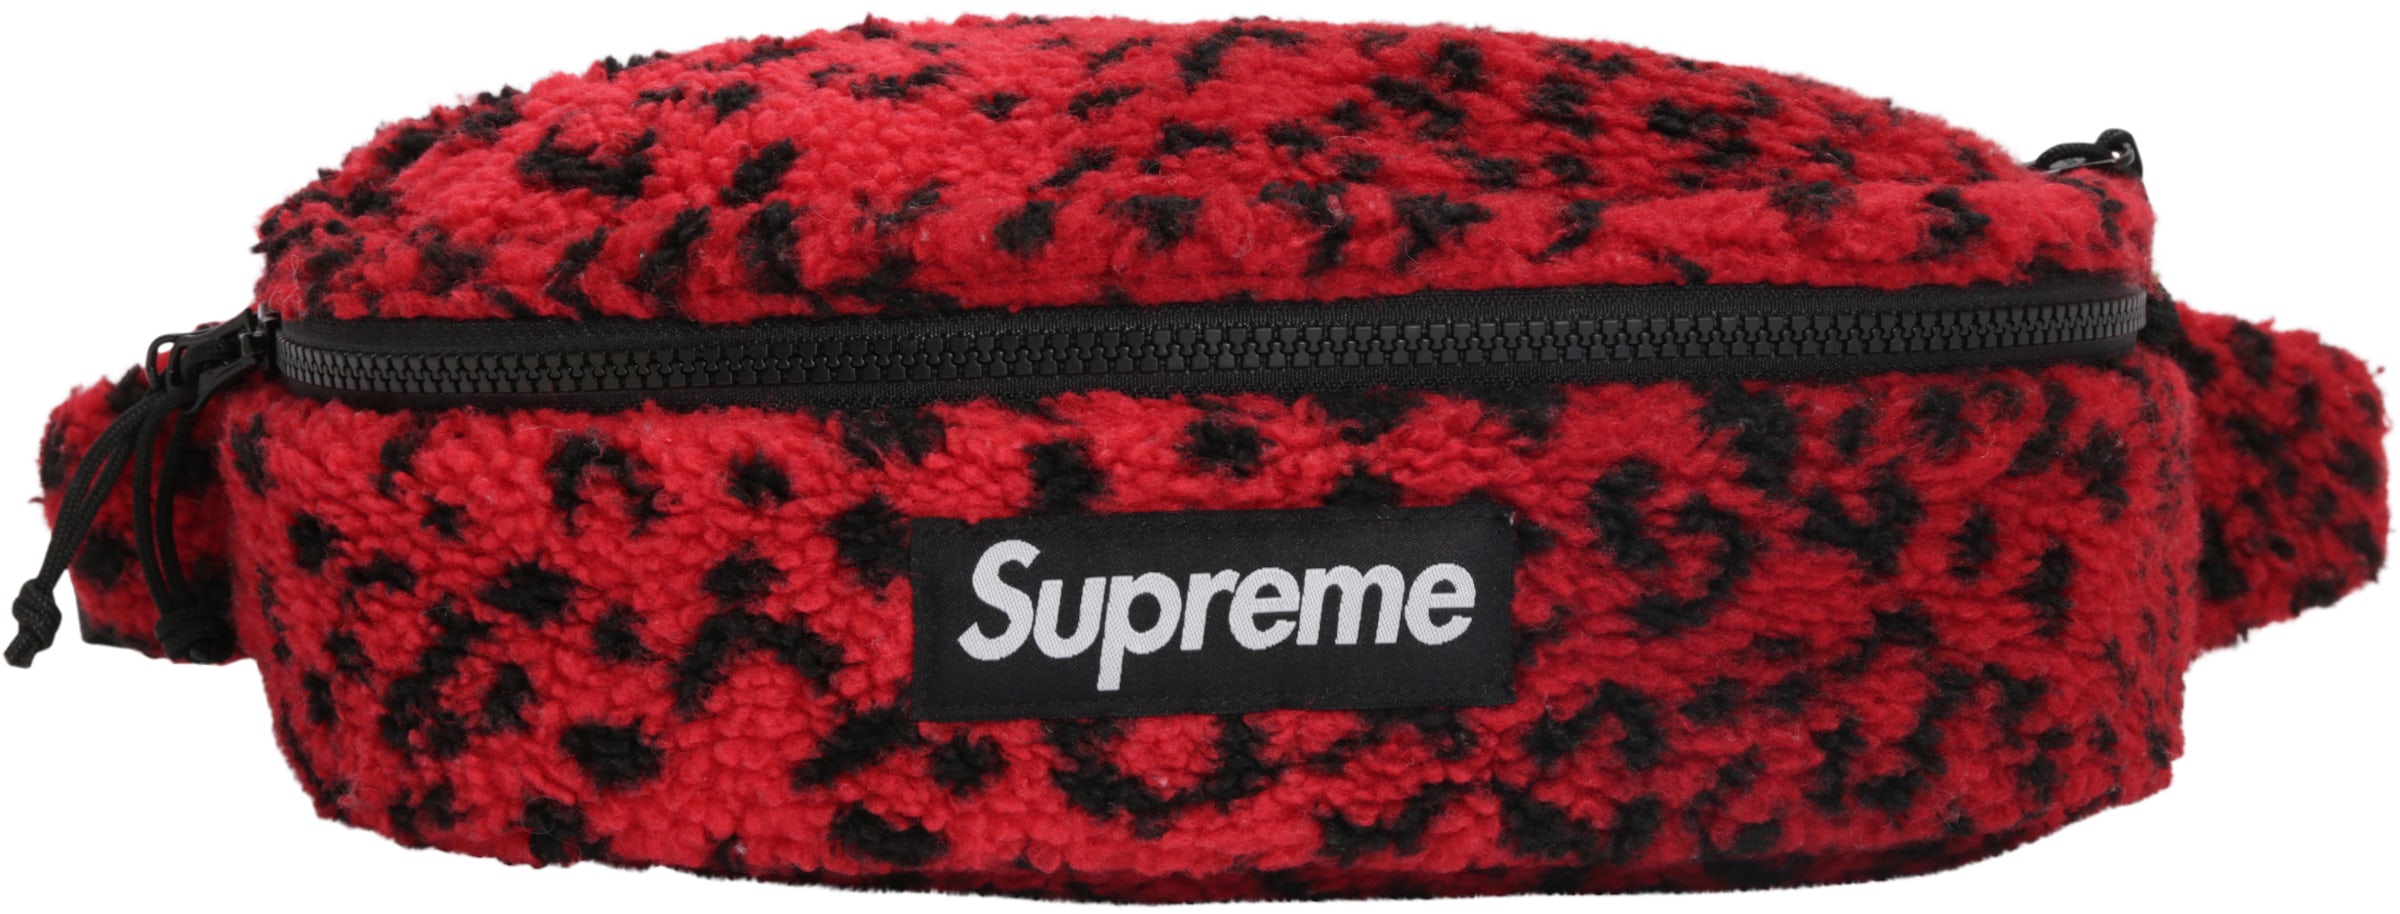 Supreme Fanny bag Red $150